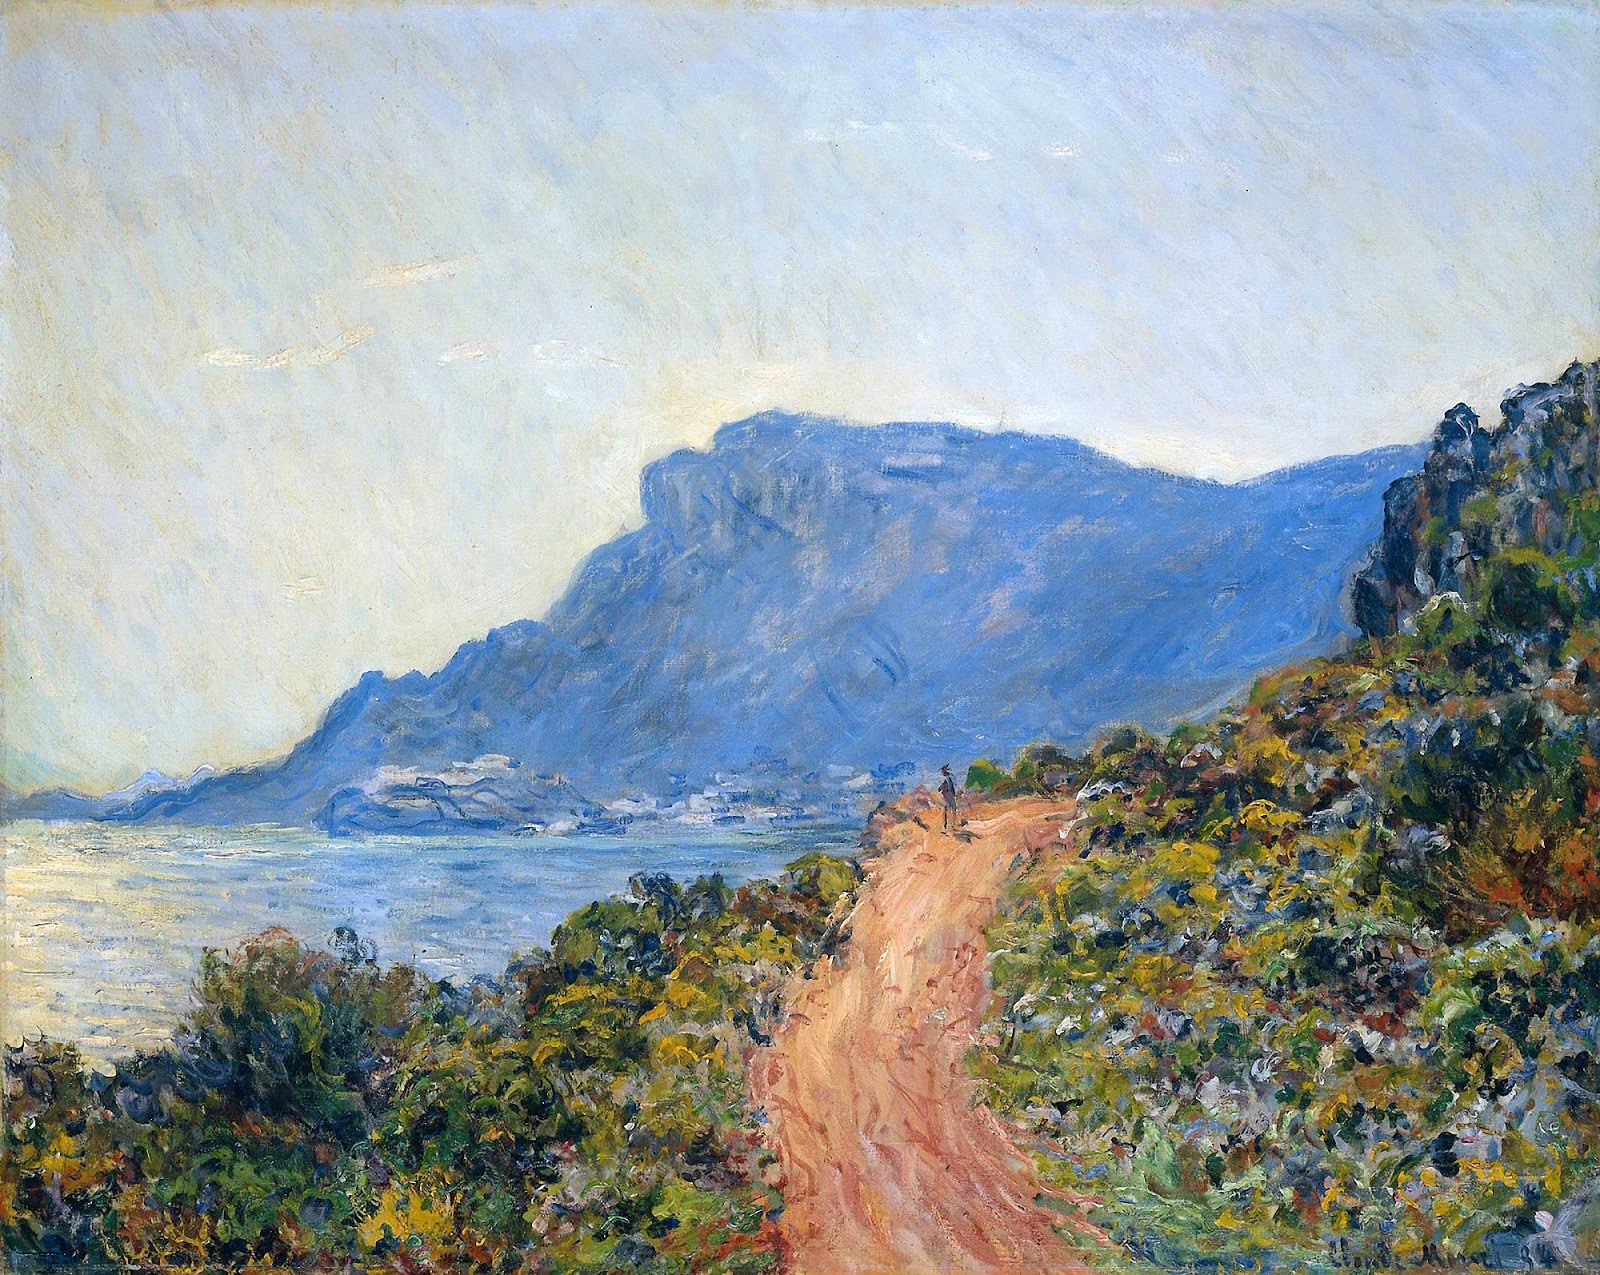 Claude+Monet-1840-1926 (344).jpg